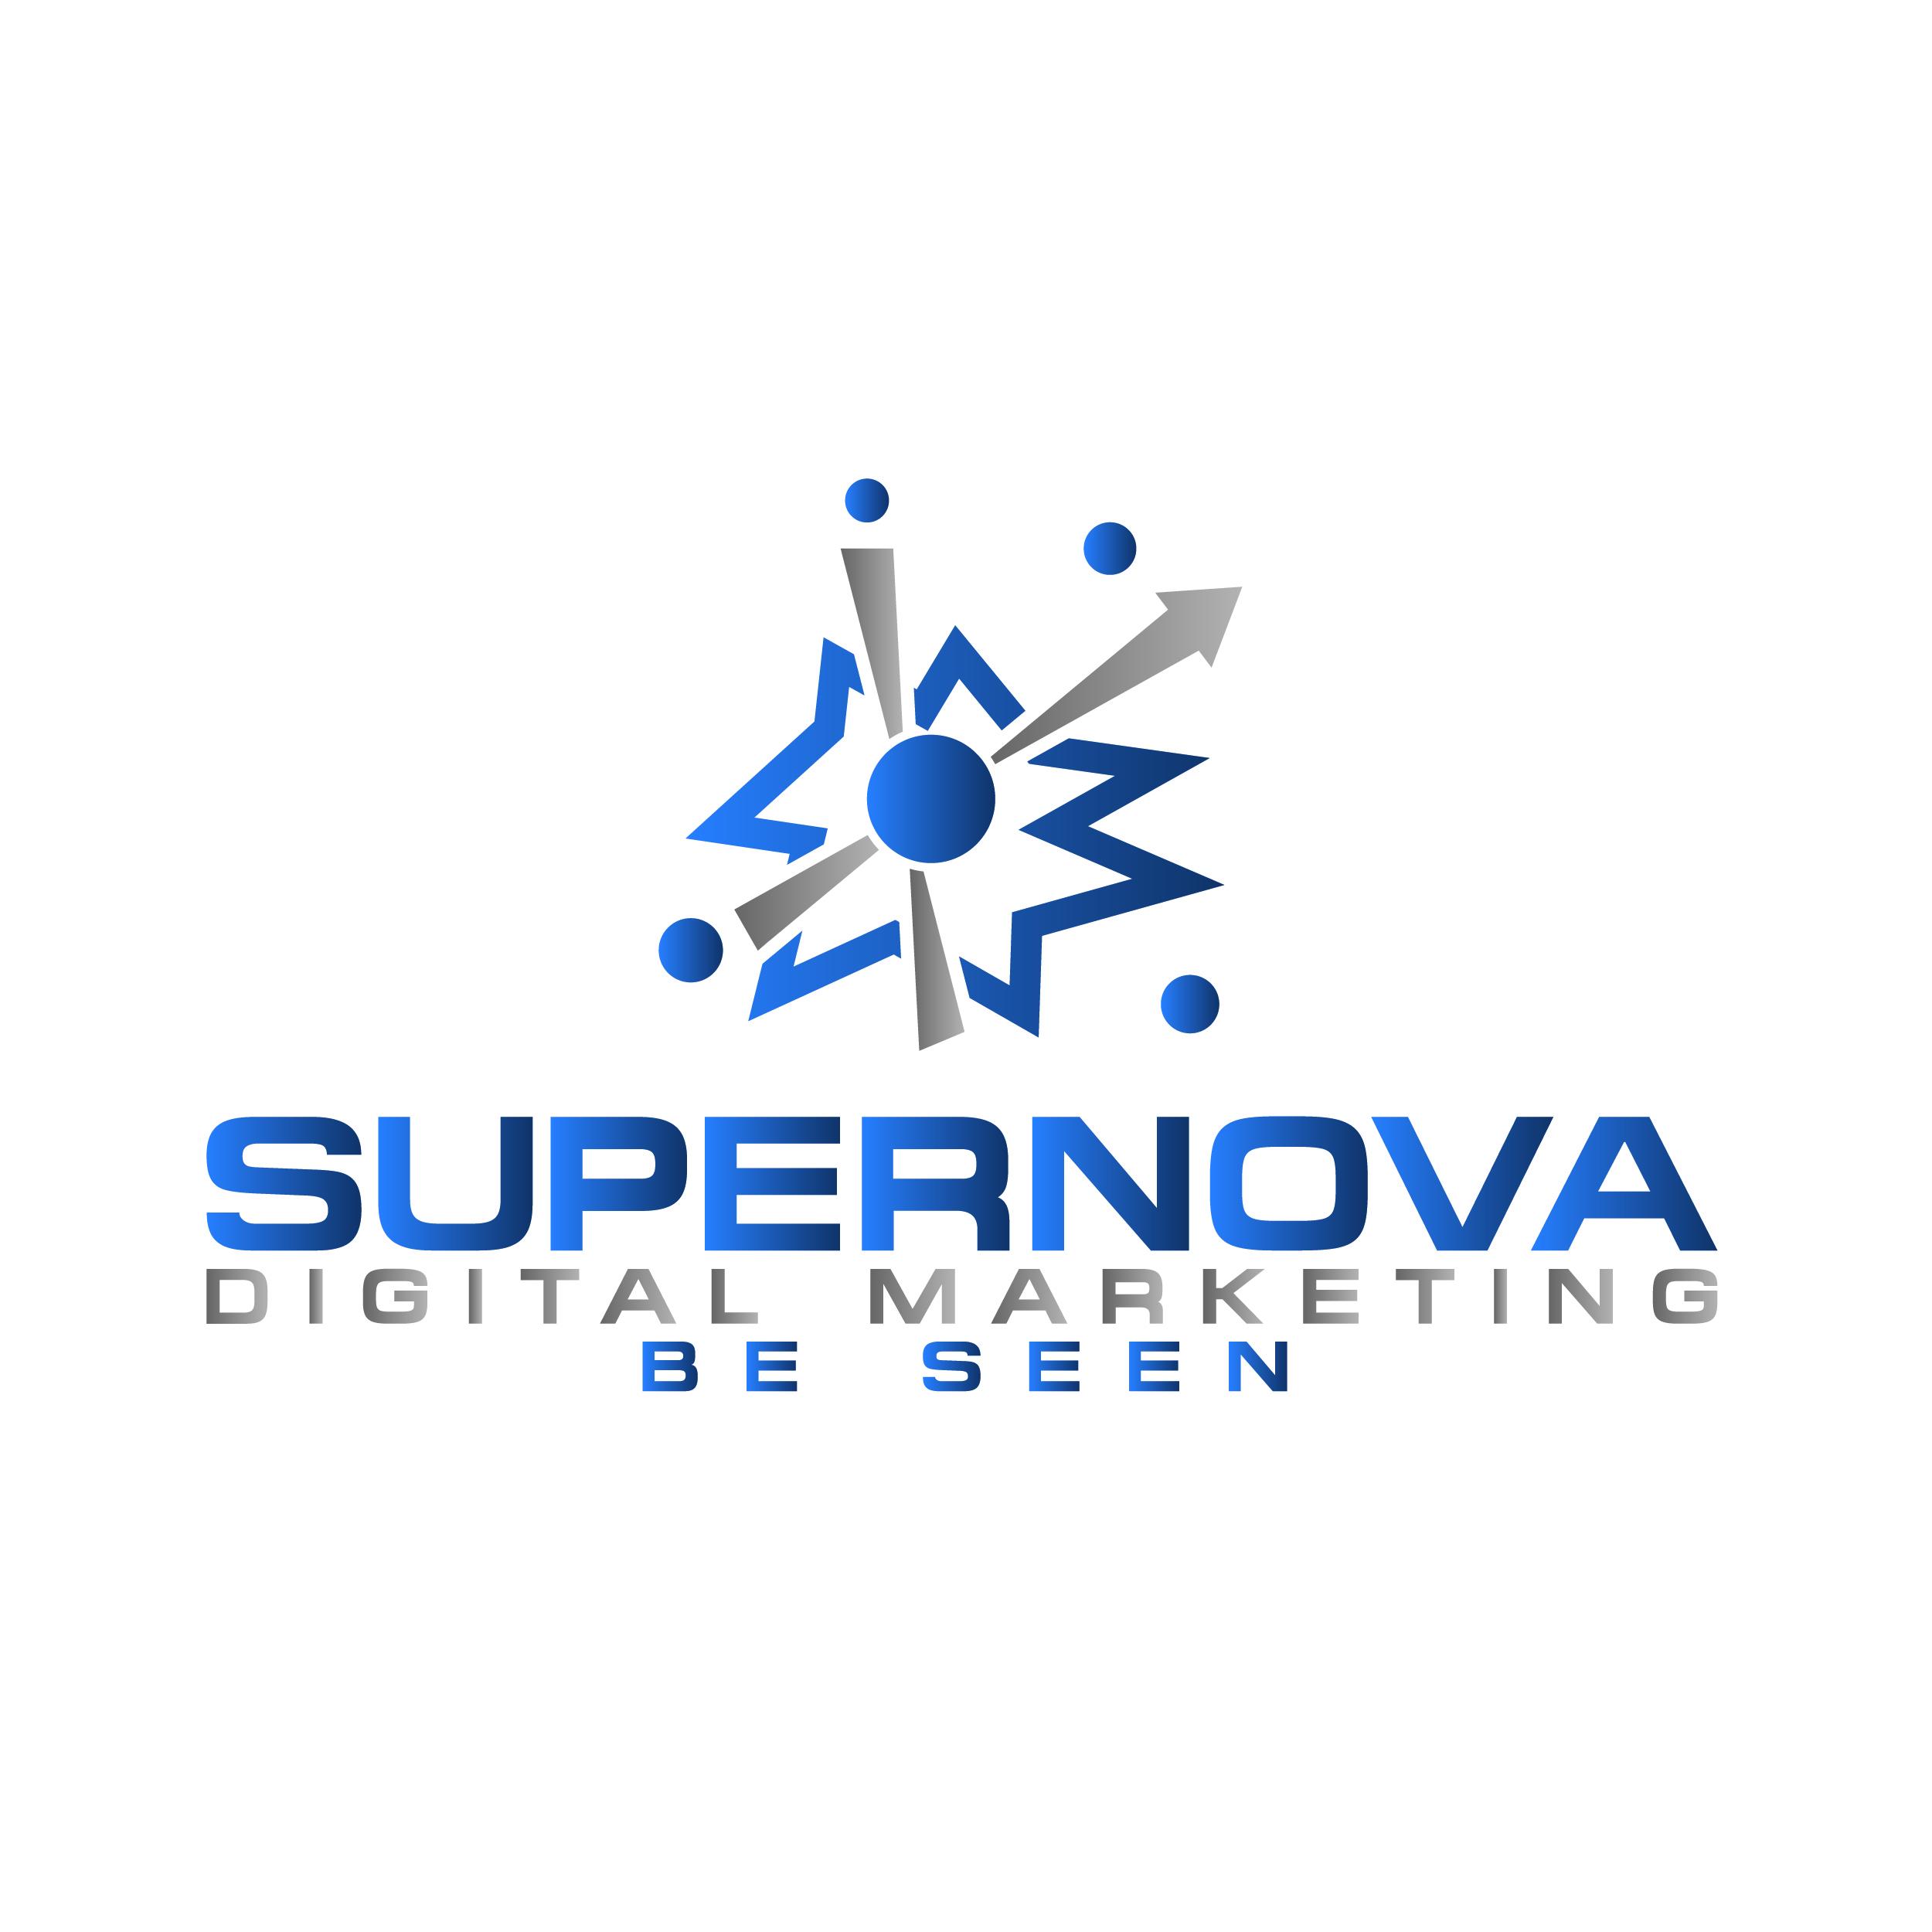 Supernova Digital Marketing profile on Qualified.One